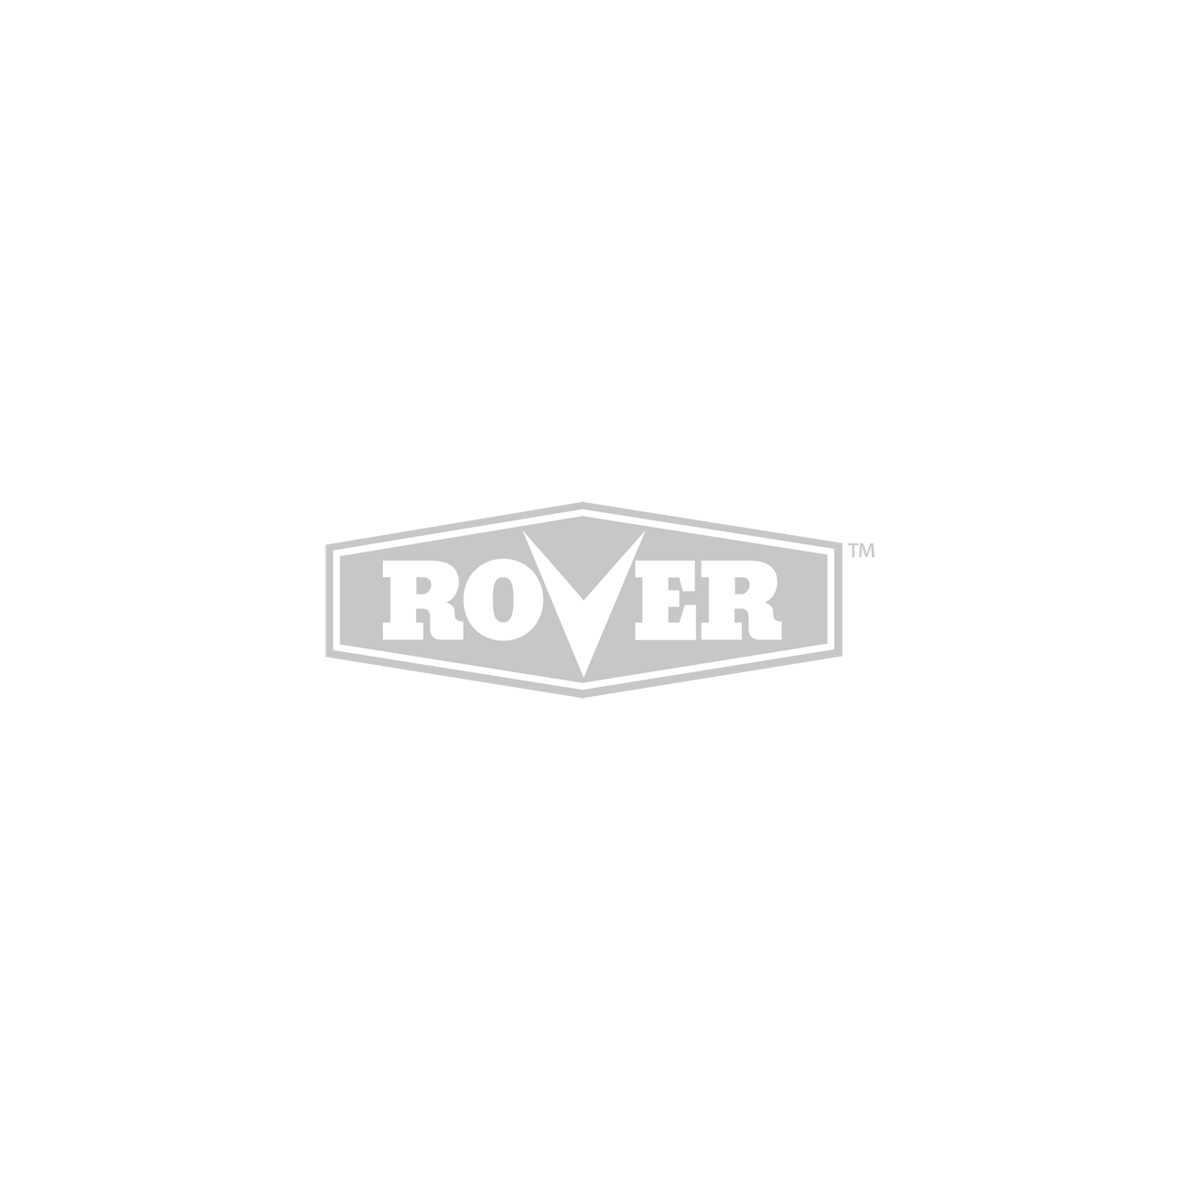 Rover web-site screenshot